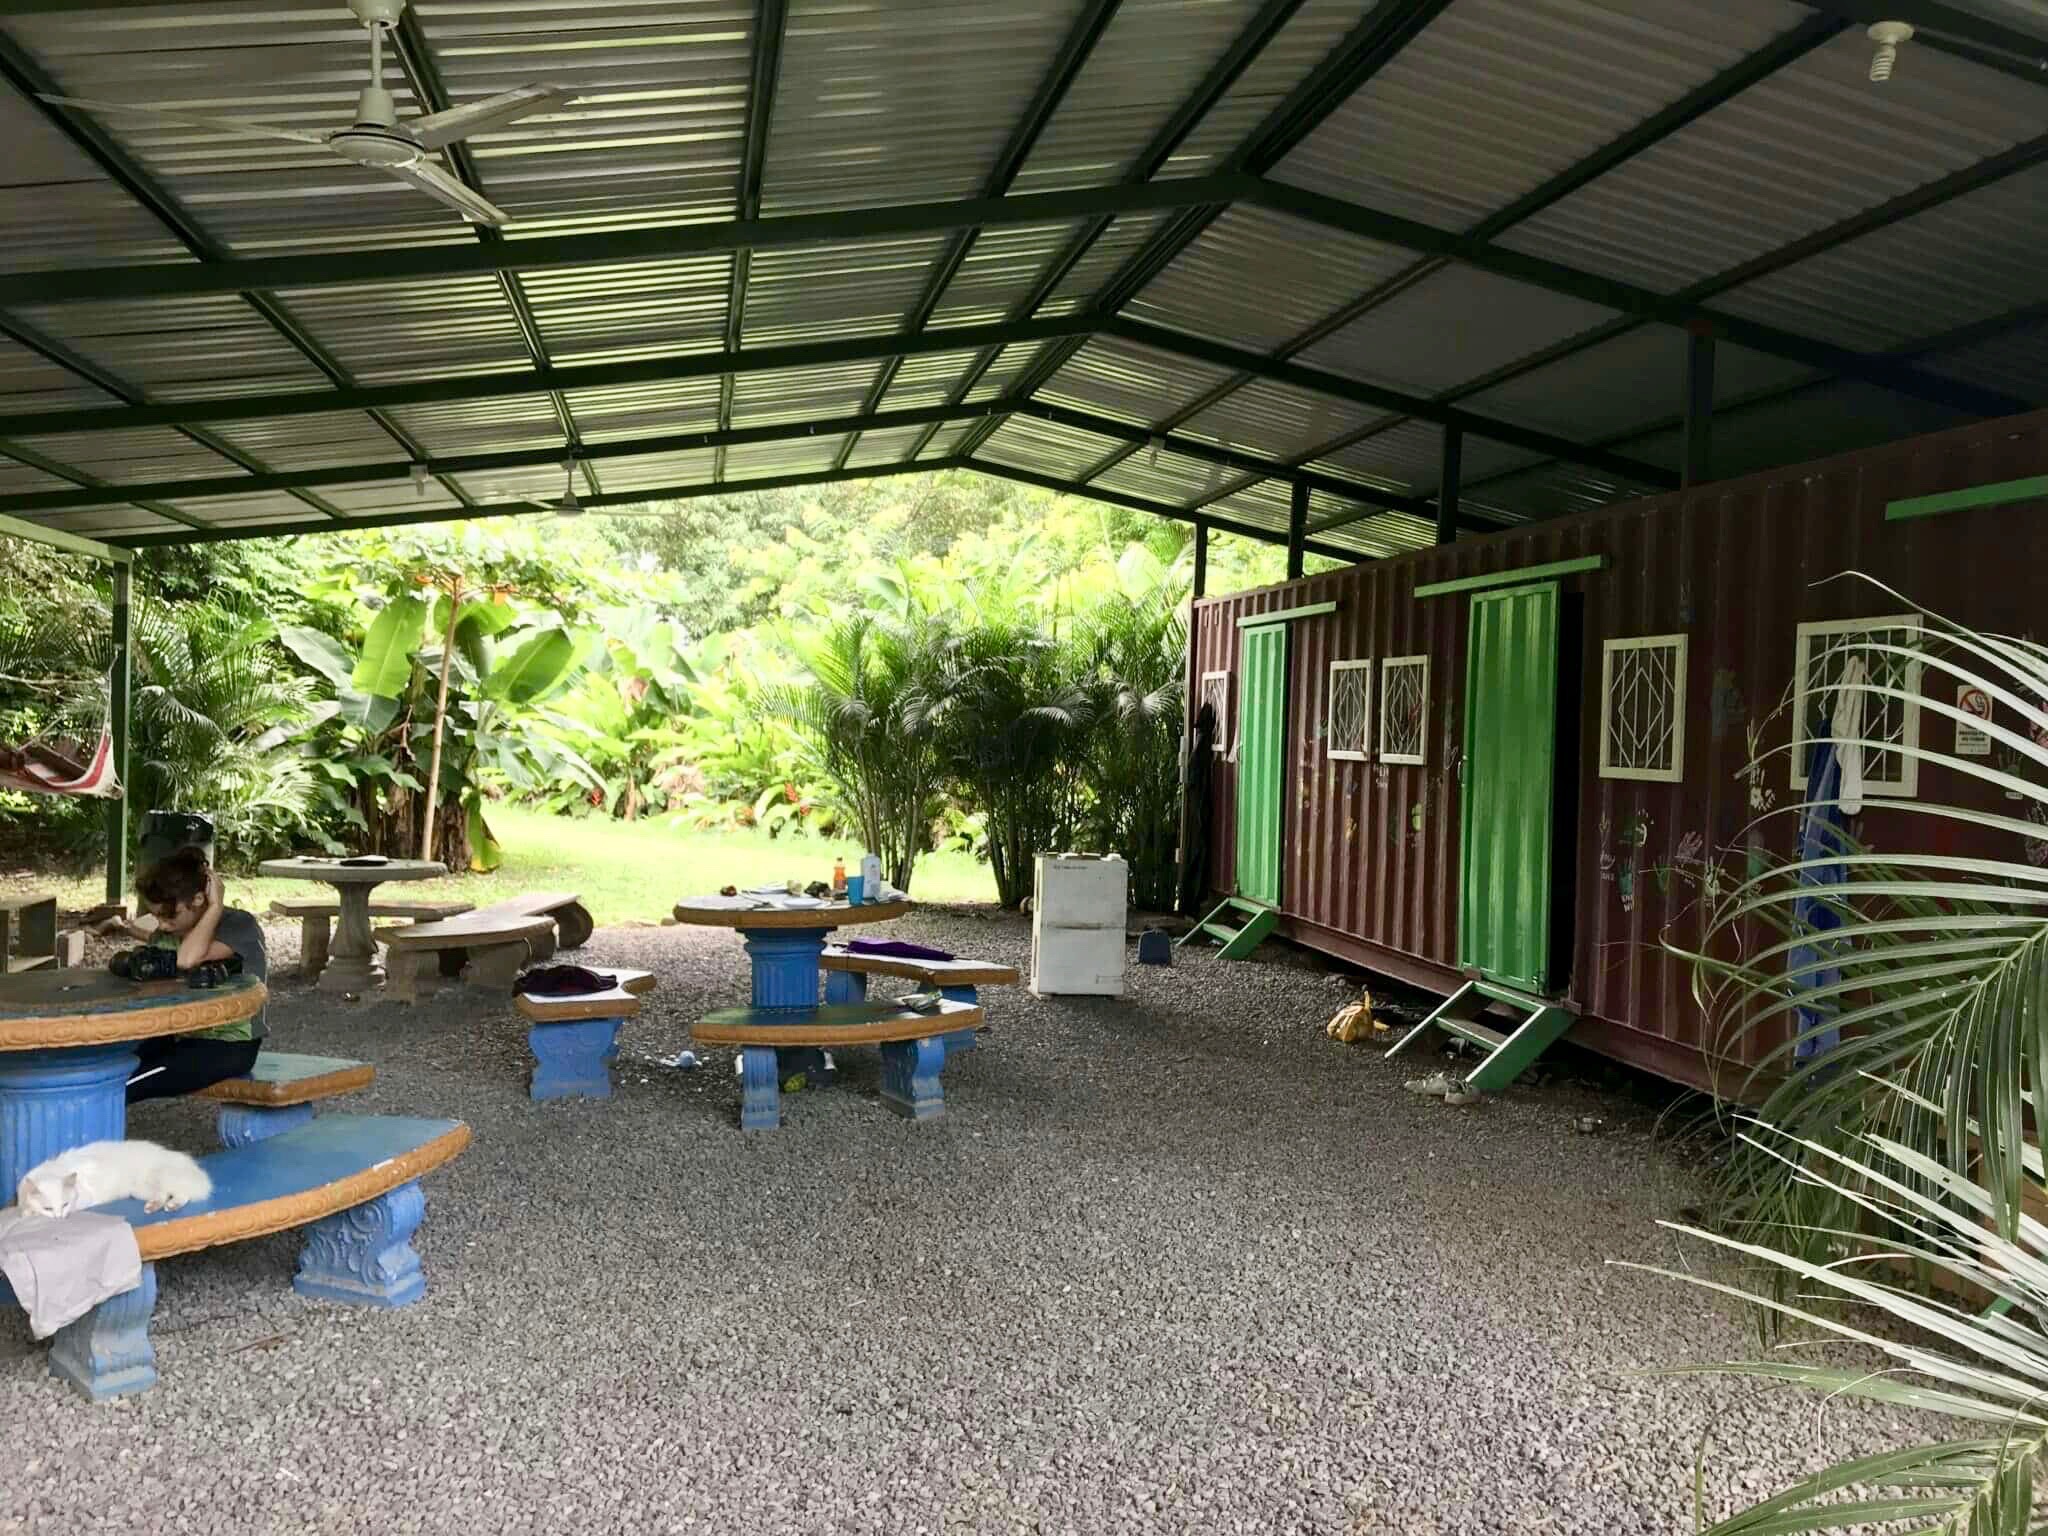 Wildlife accommodation in Costa Rica